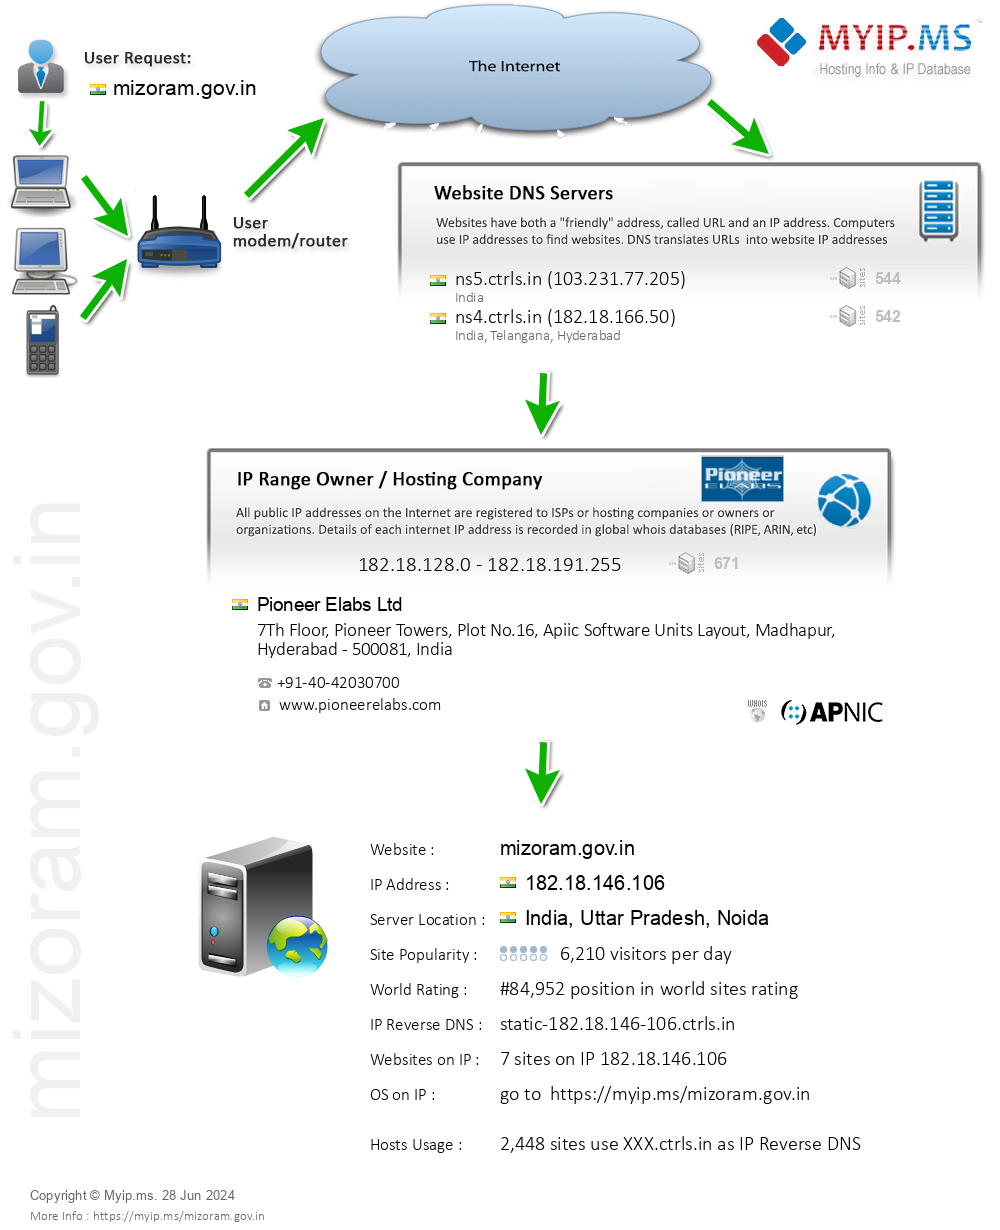 Mizoram.gov.in - Website Hosting Visual IP Diagram